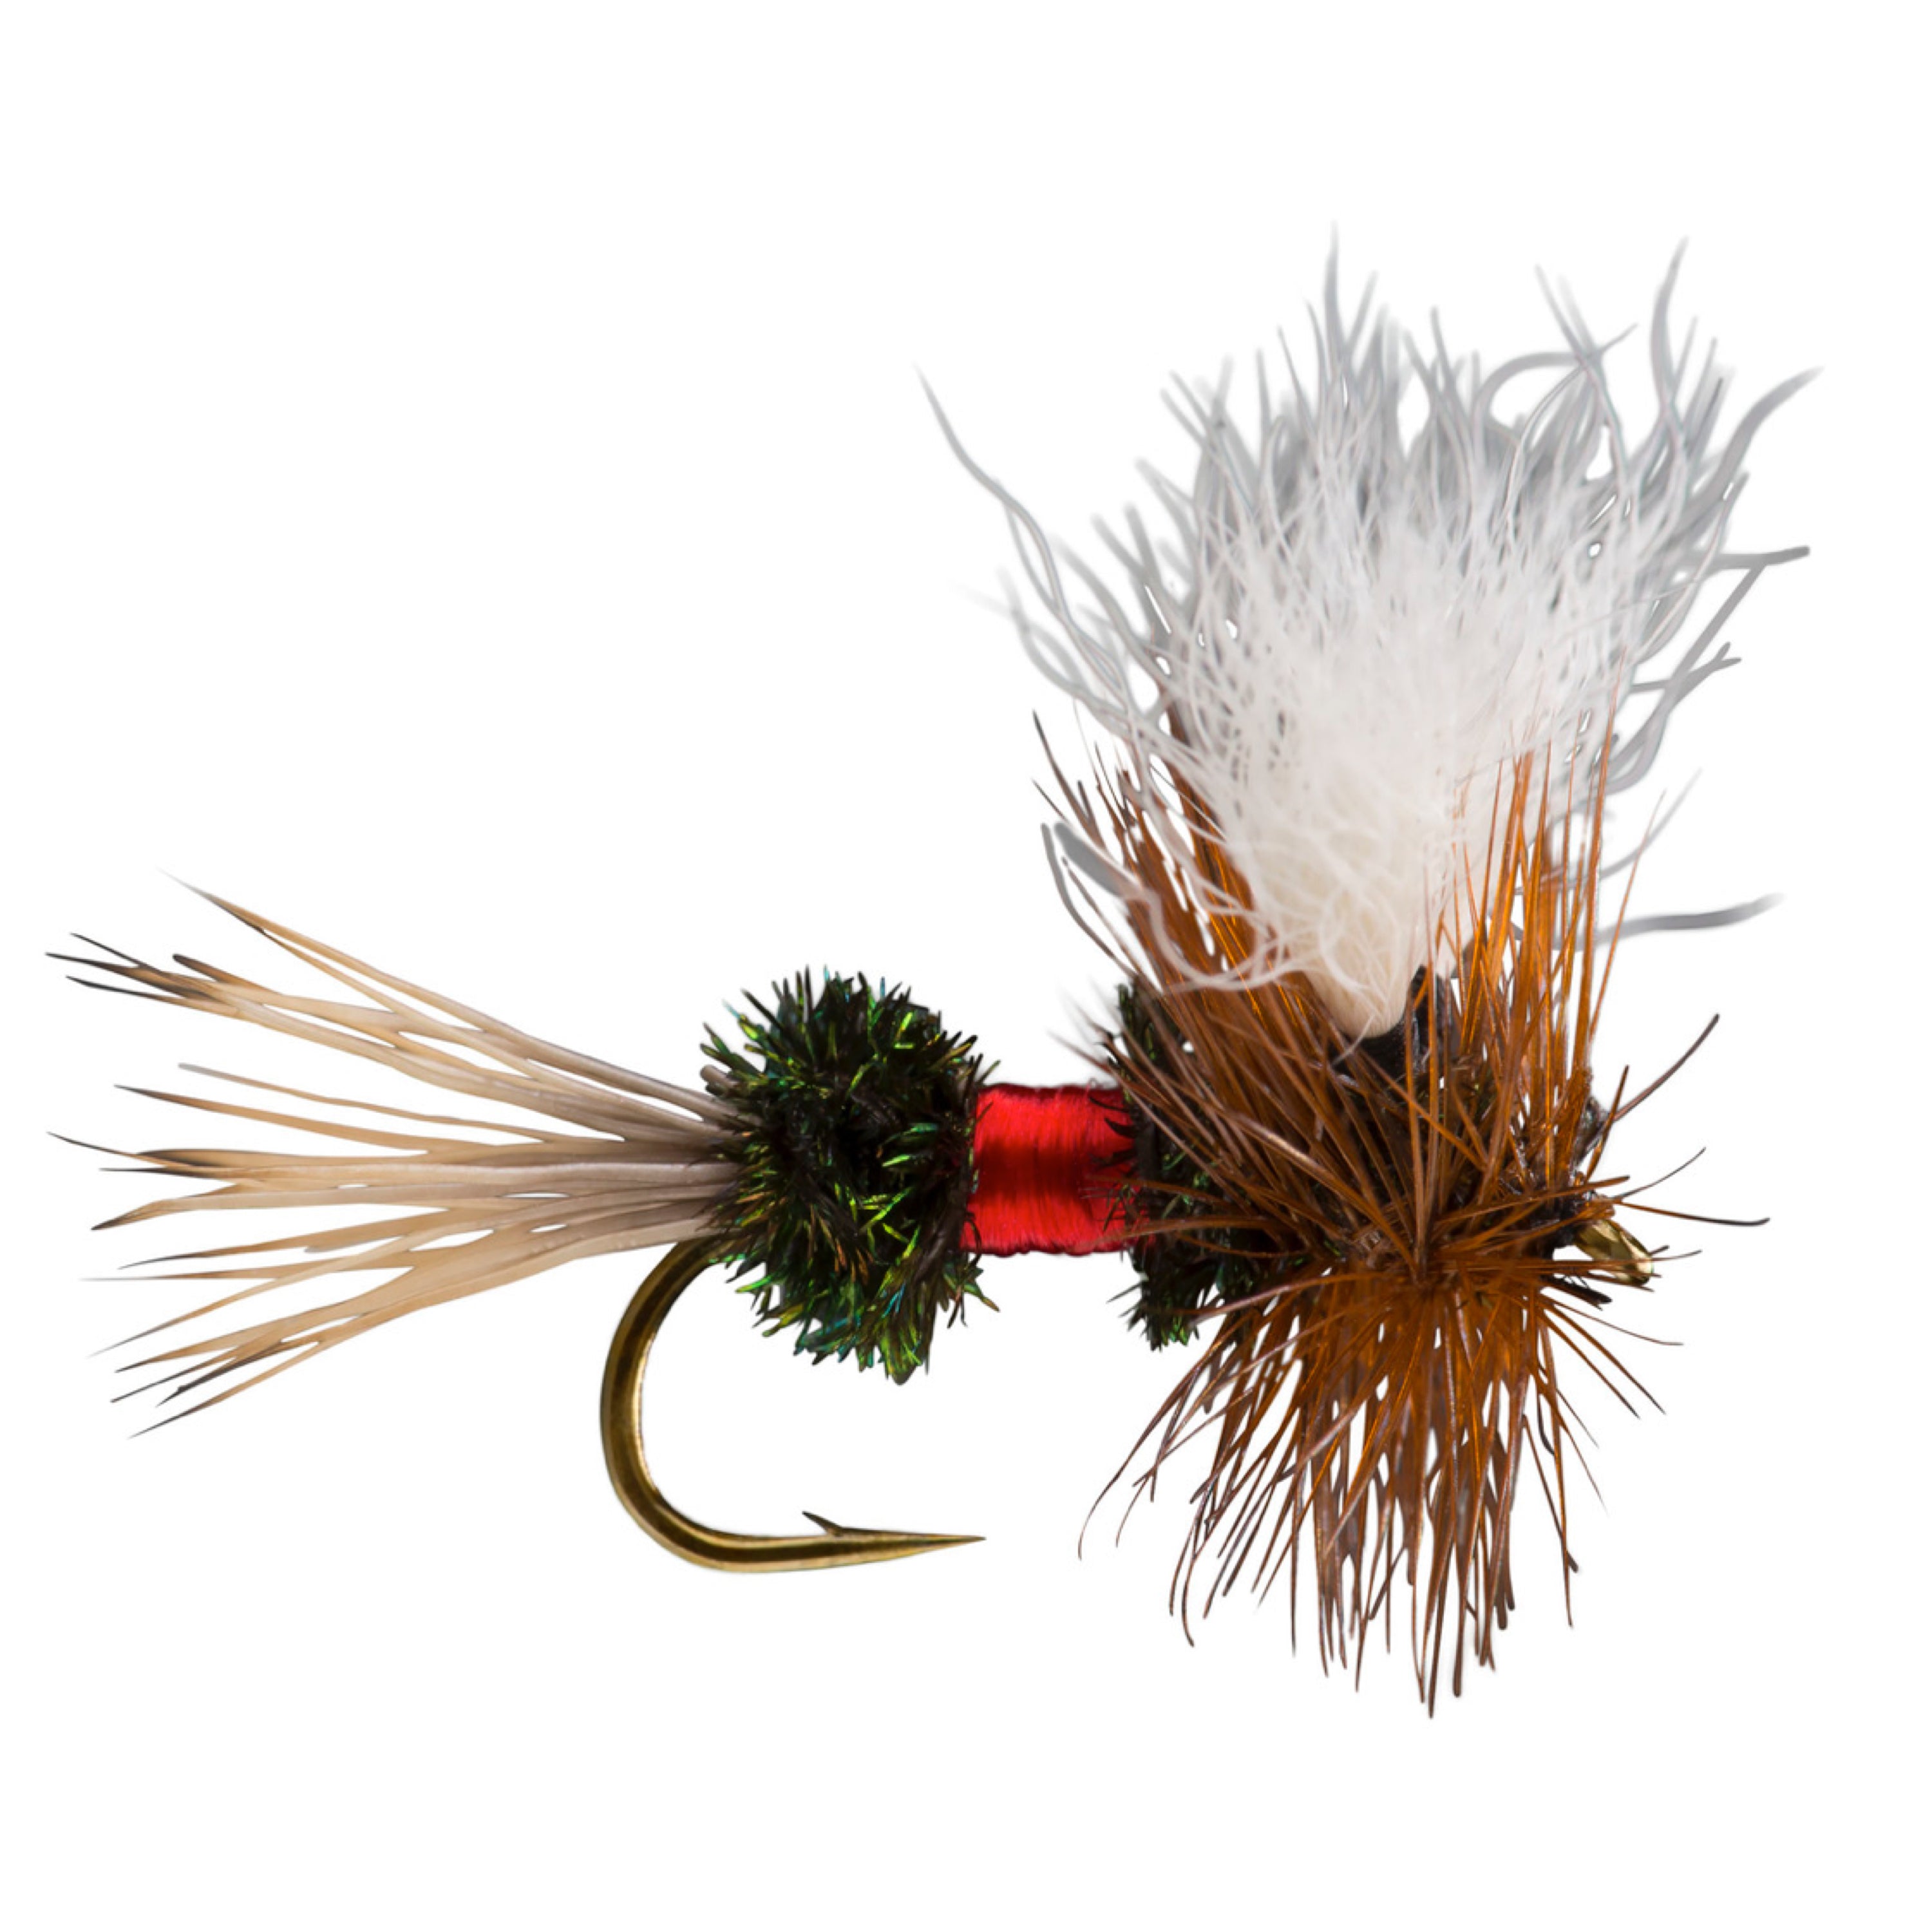 Mnft 6Pcs 10# Royal Wulff Dry Flies For Trout Fishing Flies Coachman  Fishing Fly